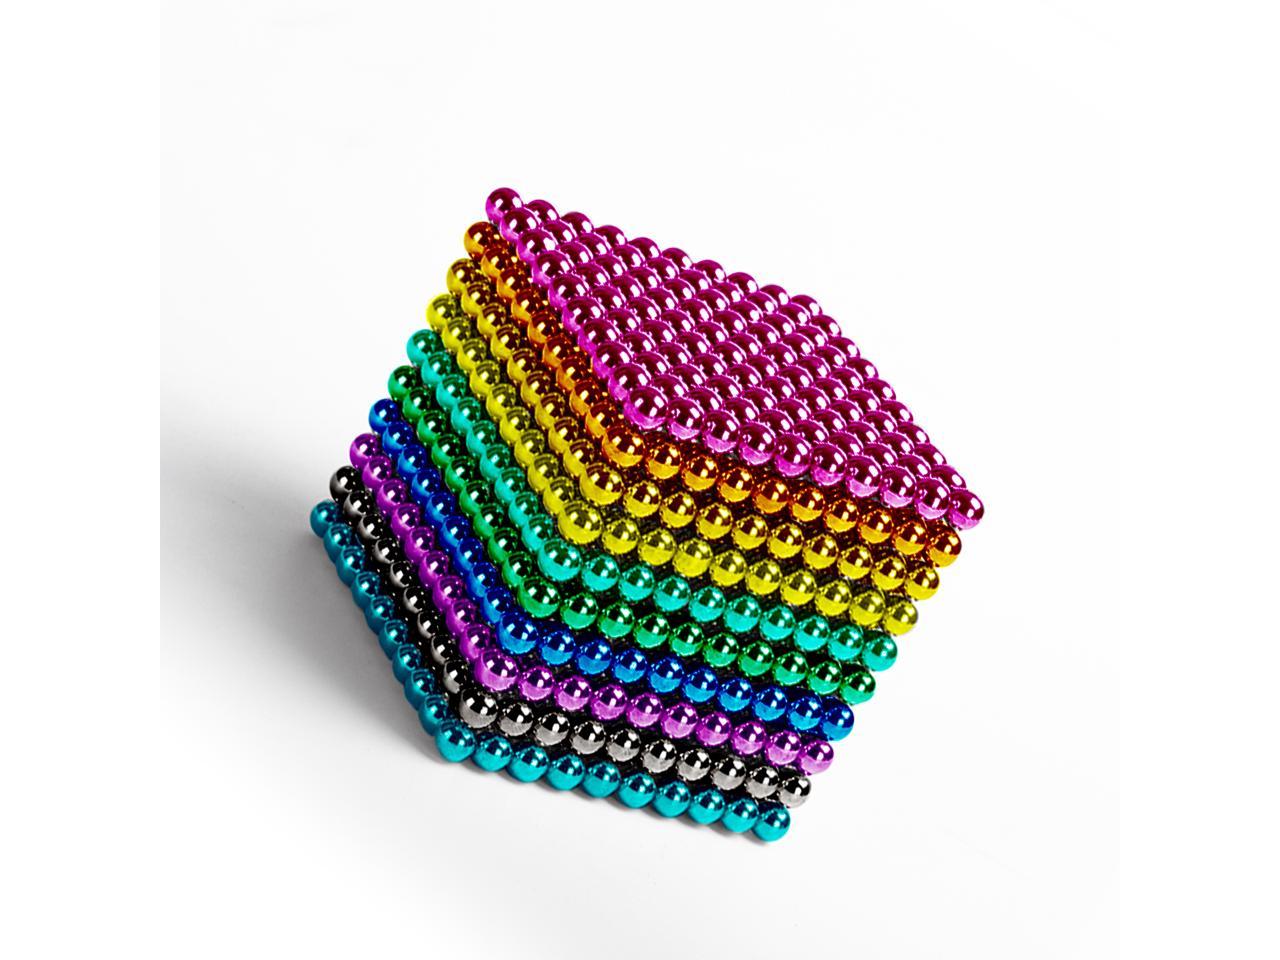 8 Colors Upgraded 5MM 216 Pieces Magnets Sculpture Building Blocks Fidget Gadget Toys for Intelligence Development Sculpture Stress Relief Magnet Magnets 